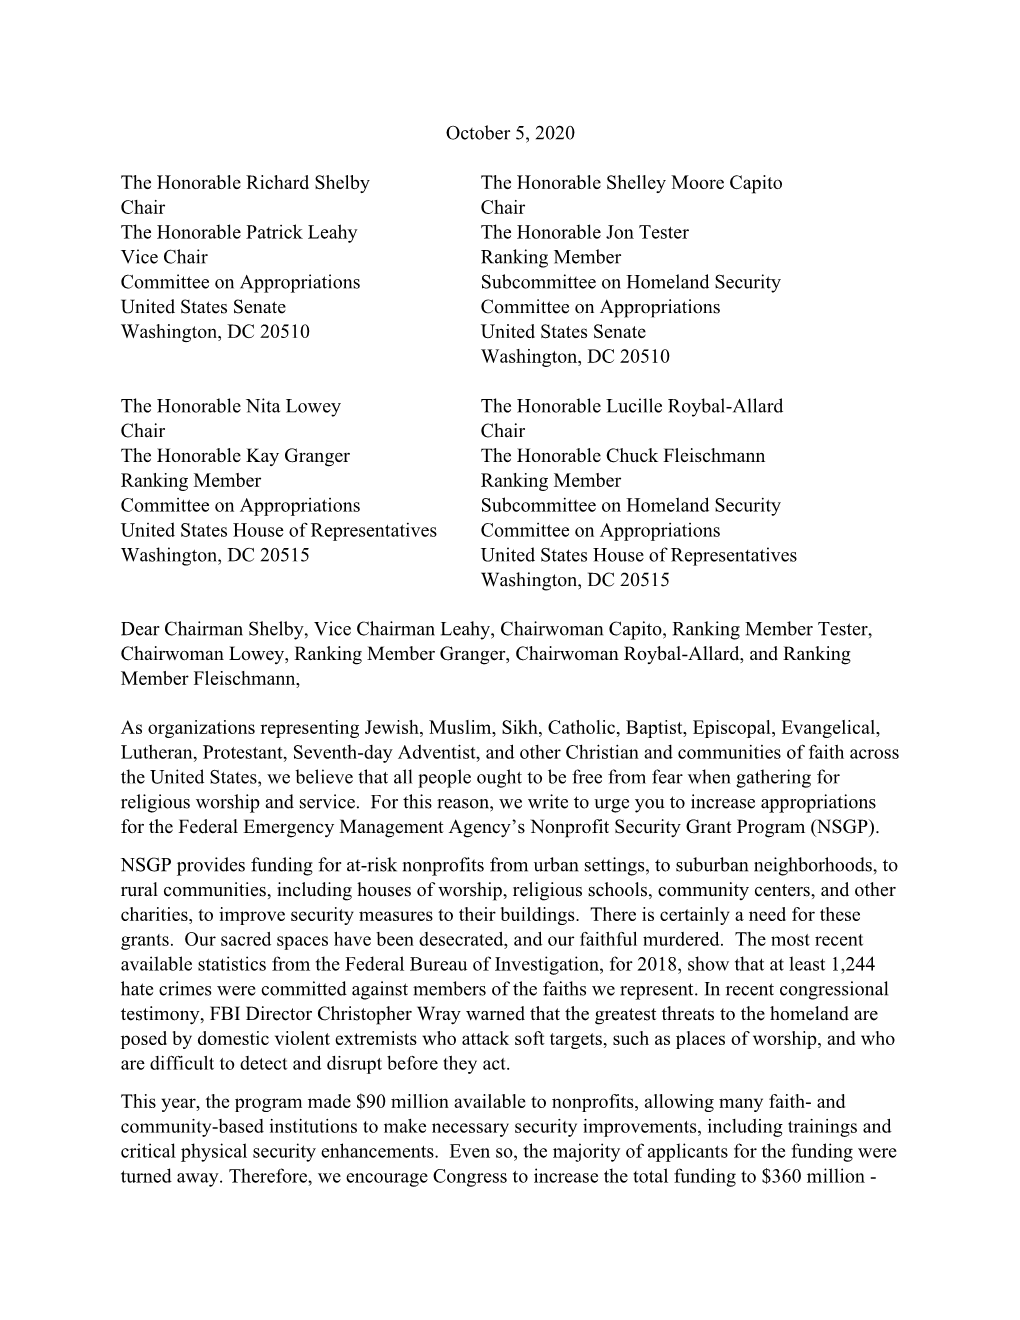 USCCB Interfaith Letter on Nonprofit Security Grants 10.5.20.Pdf